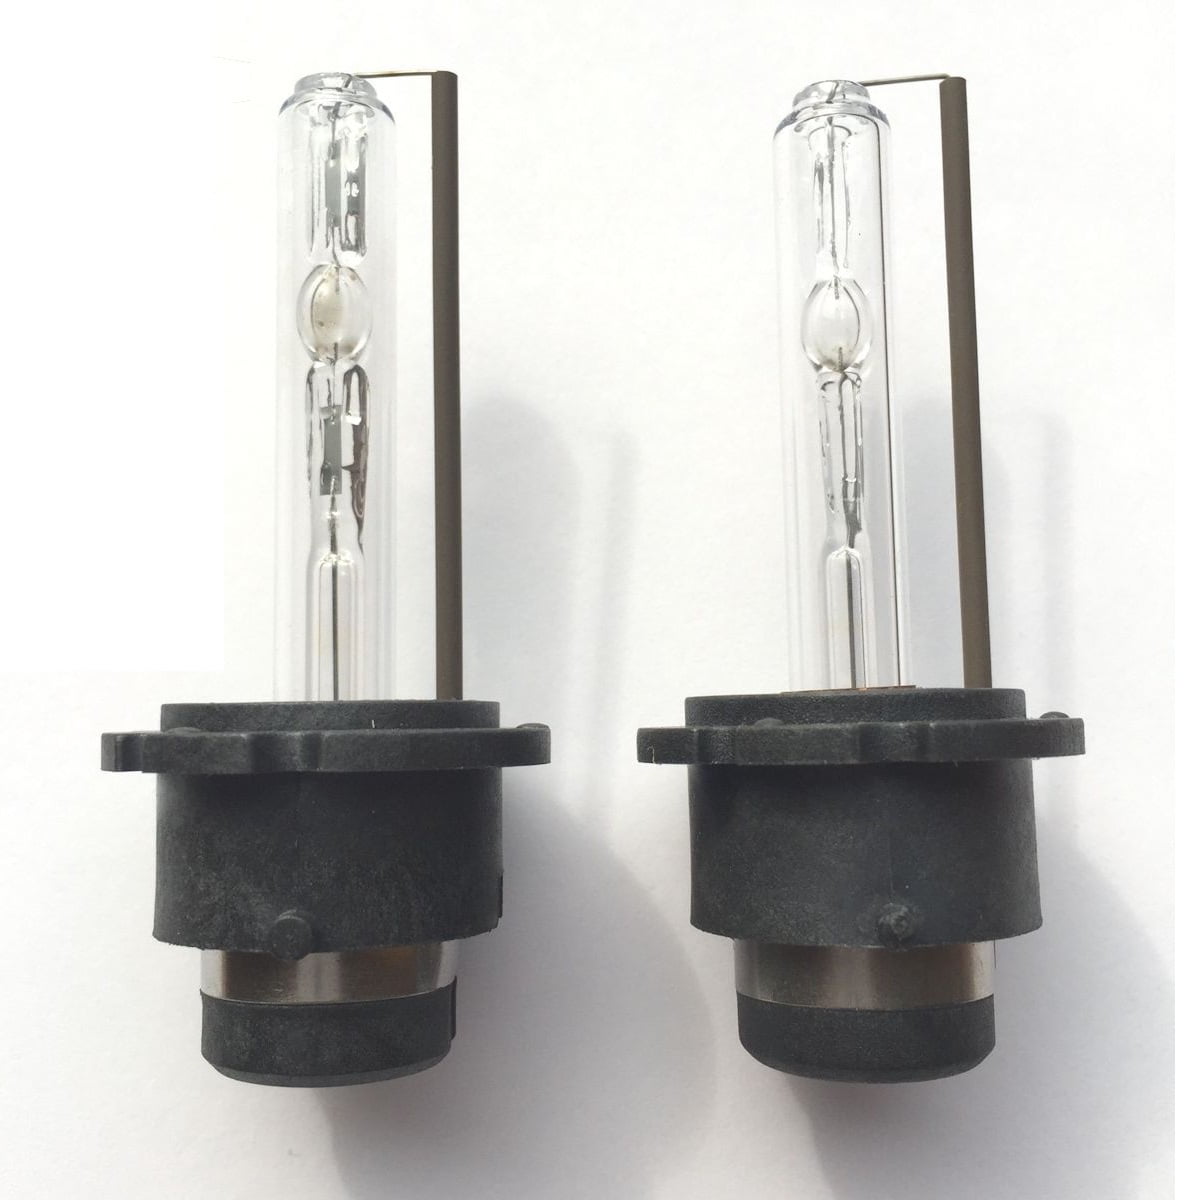 2 x D2S Xenon Headlight Bulbs Lamps Light Lights Pair 6000K 35W White NEW 